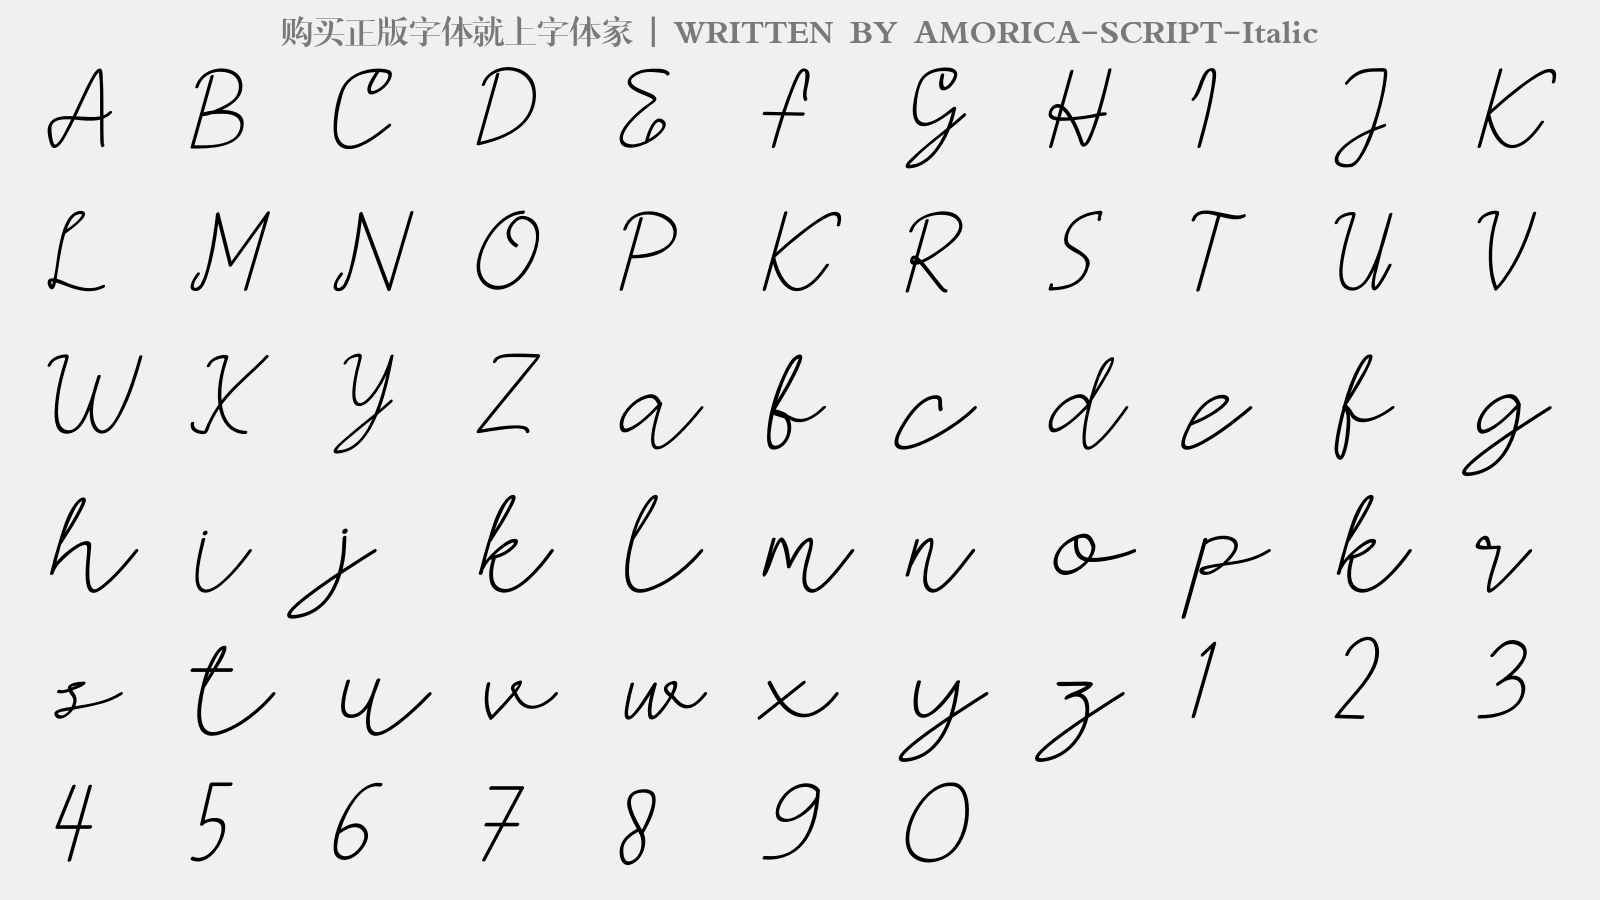 AMORICA-SCRIPT-Italic - 大写字母/小写字母/数字